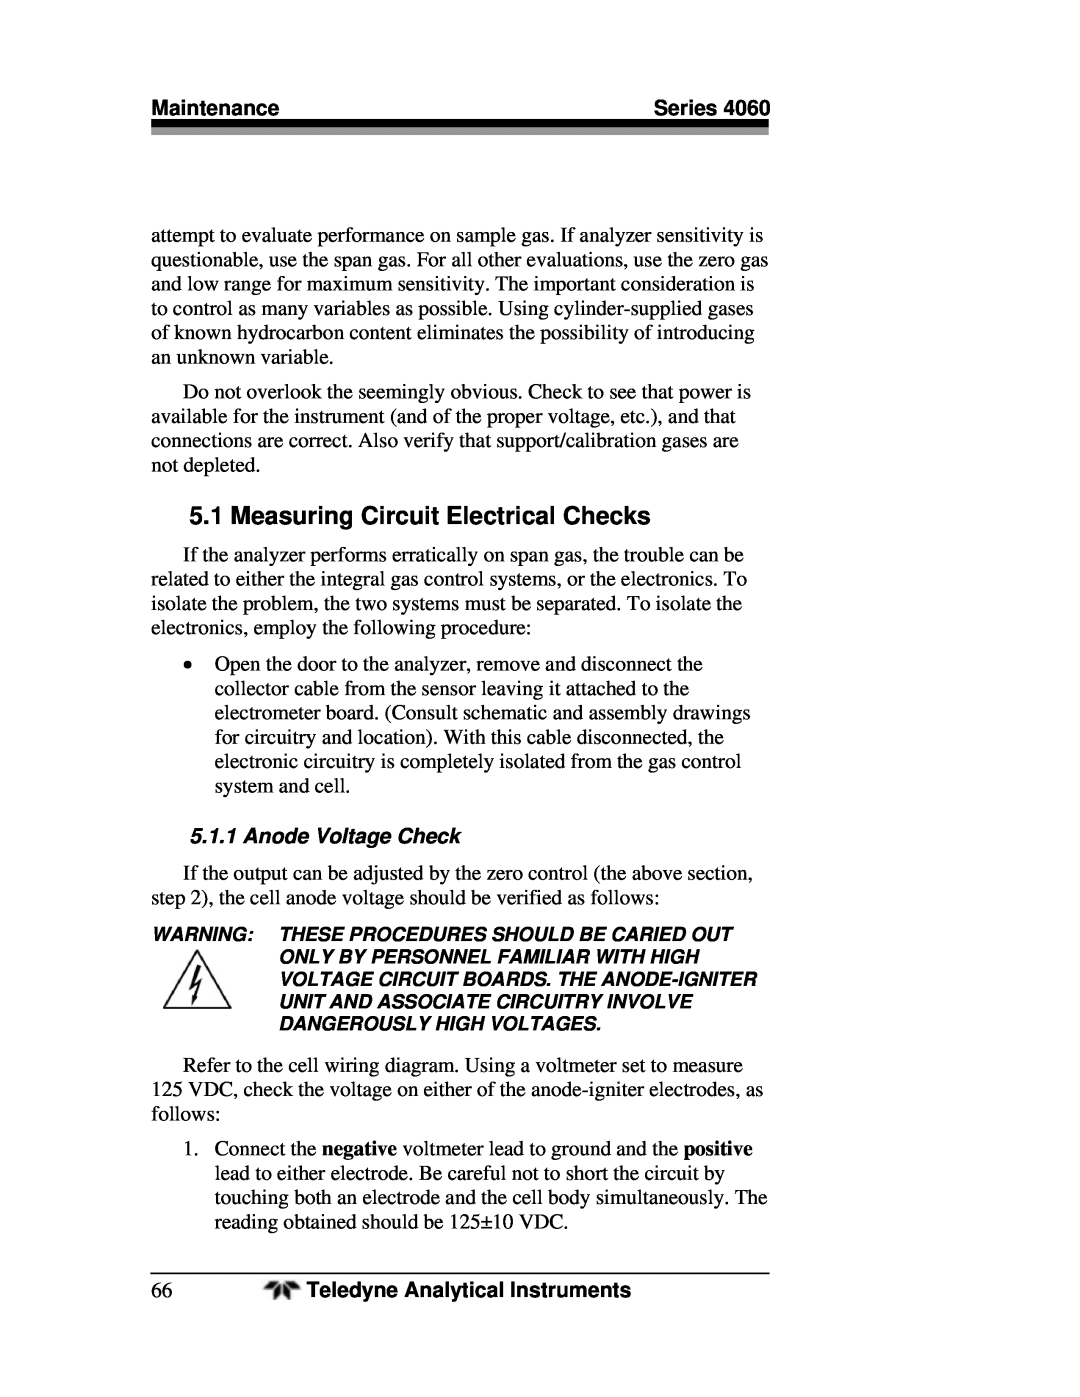 Teledyne 4060 manual Measuring Circuit Electrical Checks, Anode Voltage Check 